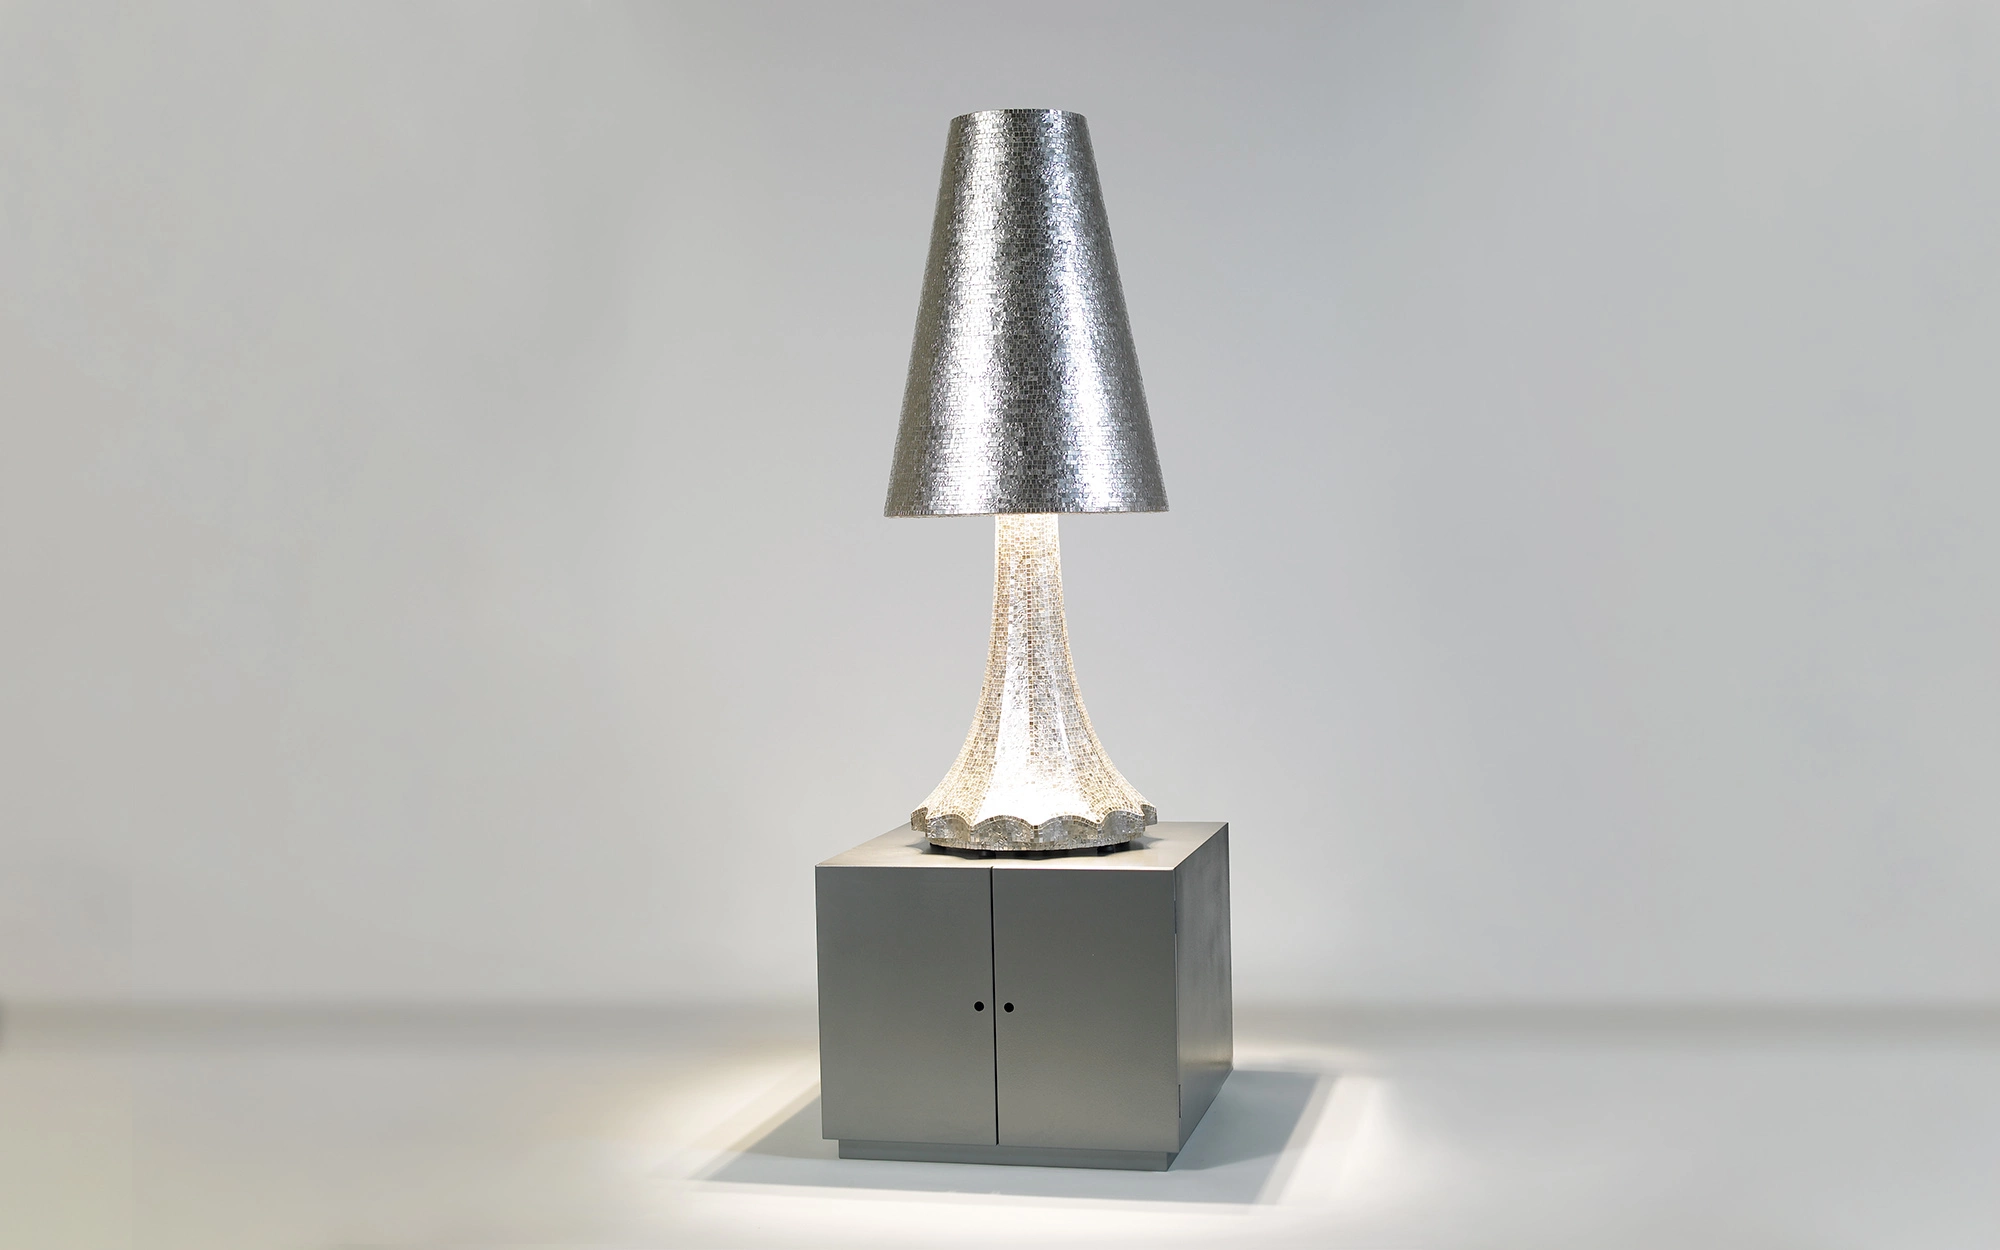 Lampada white gold - Alessandro Mendini - Stool - Galerie kreo